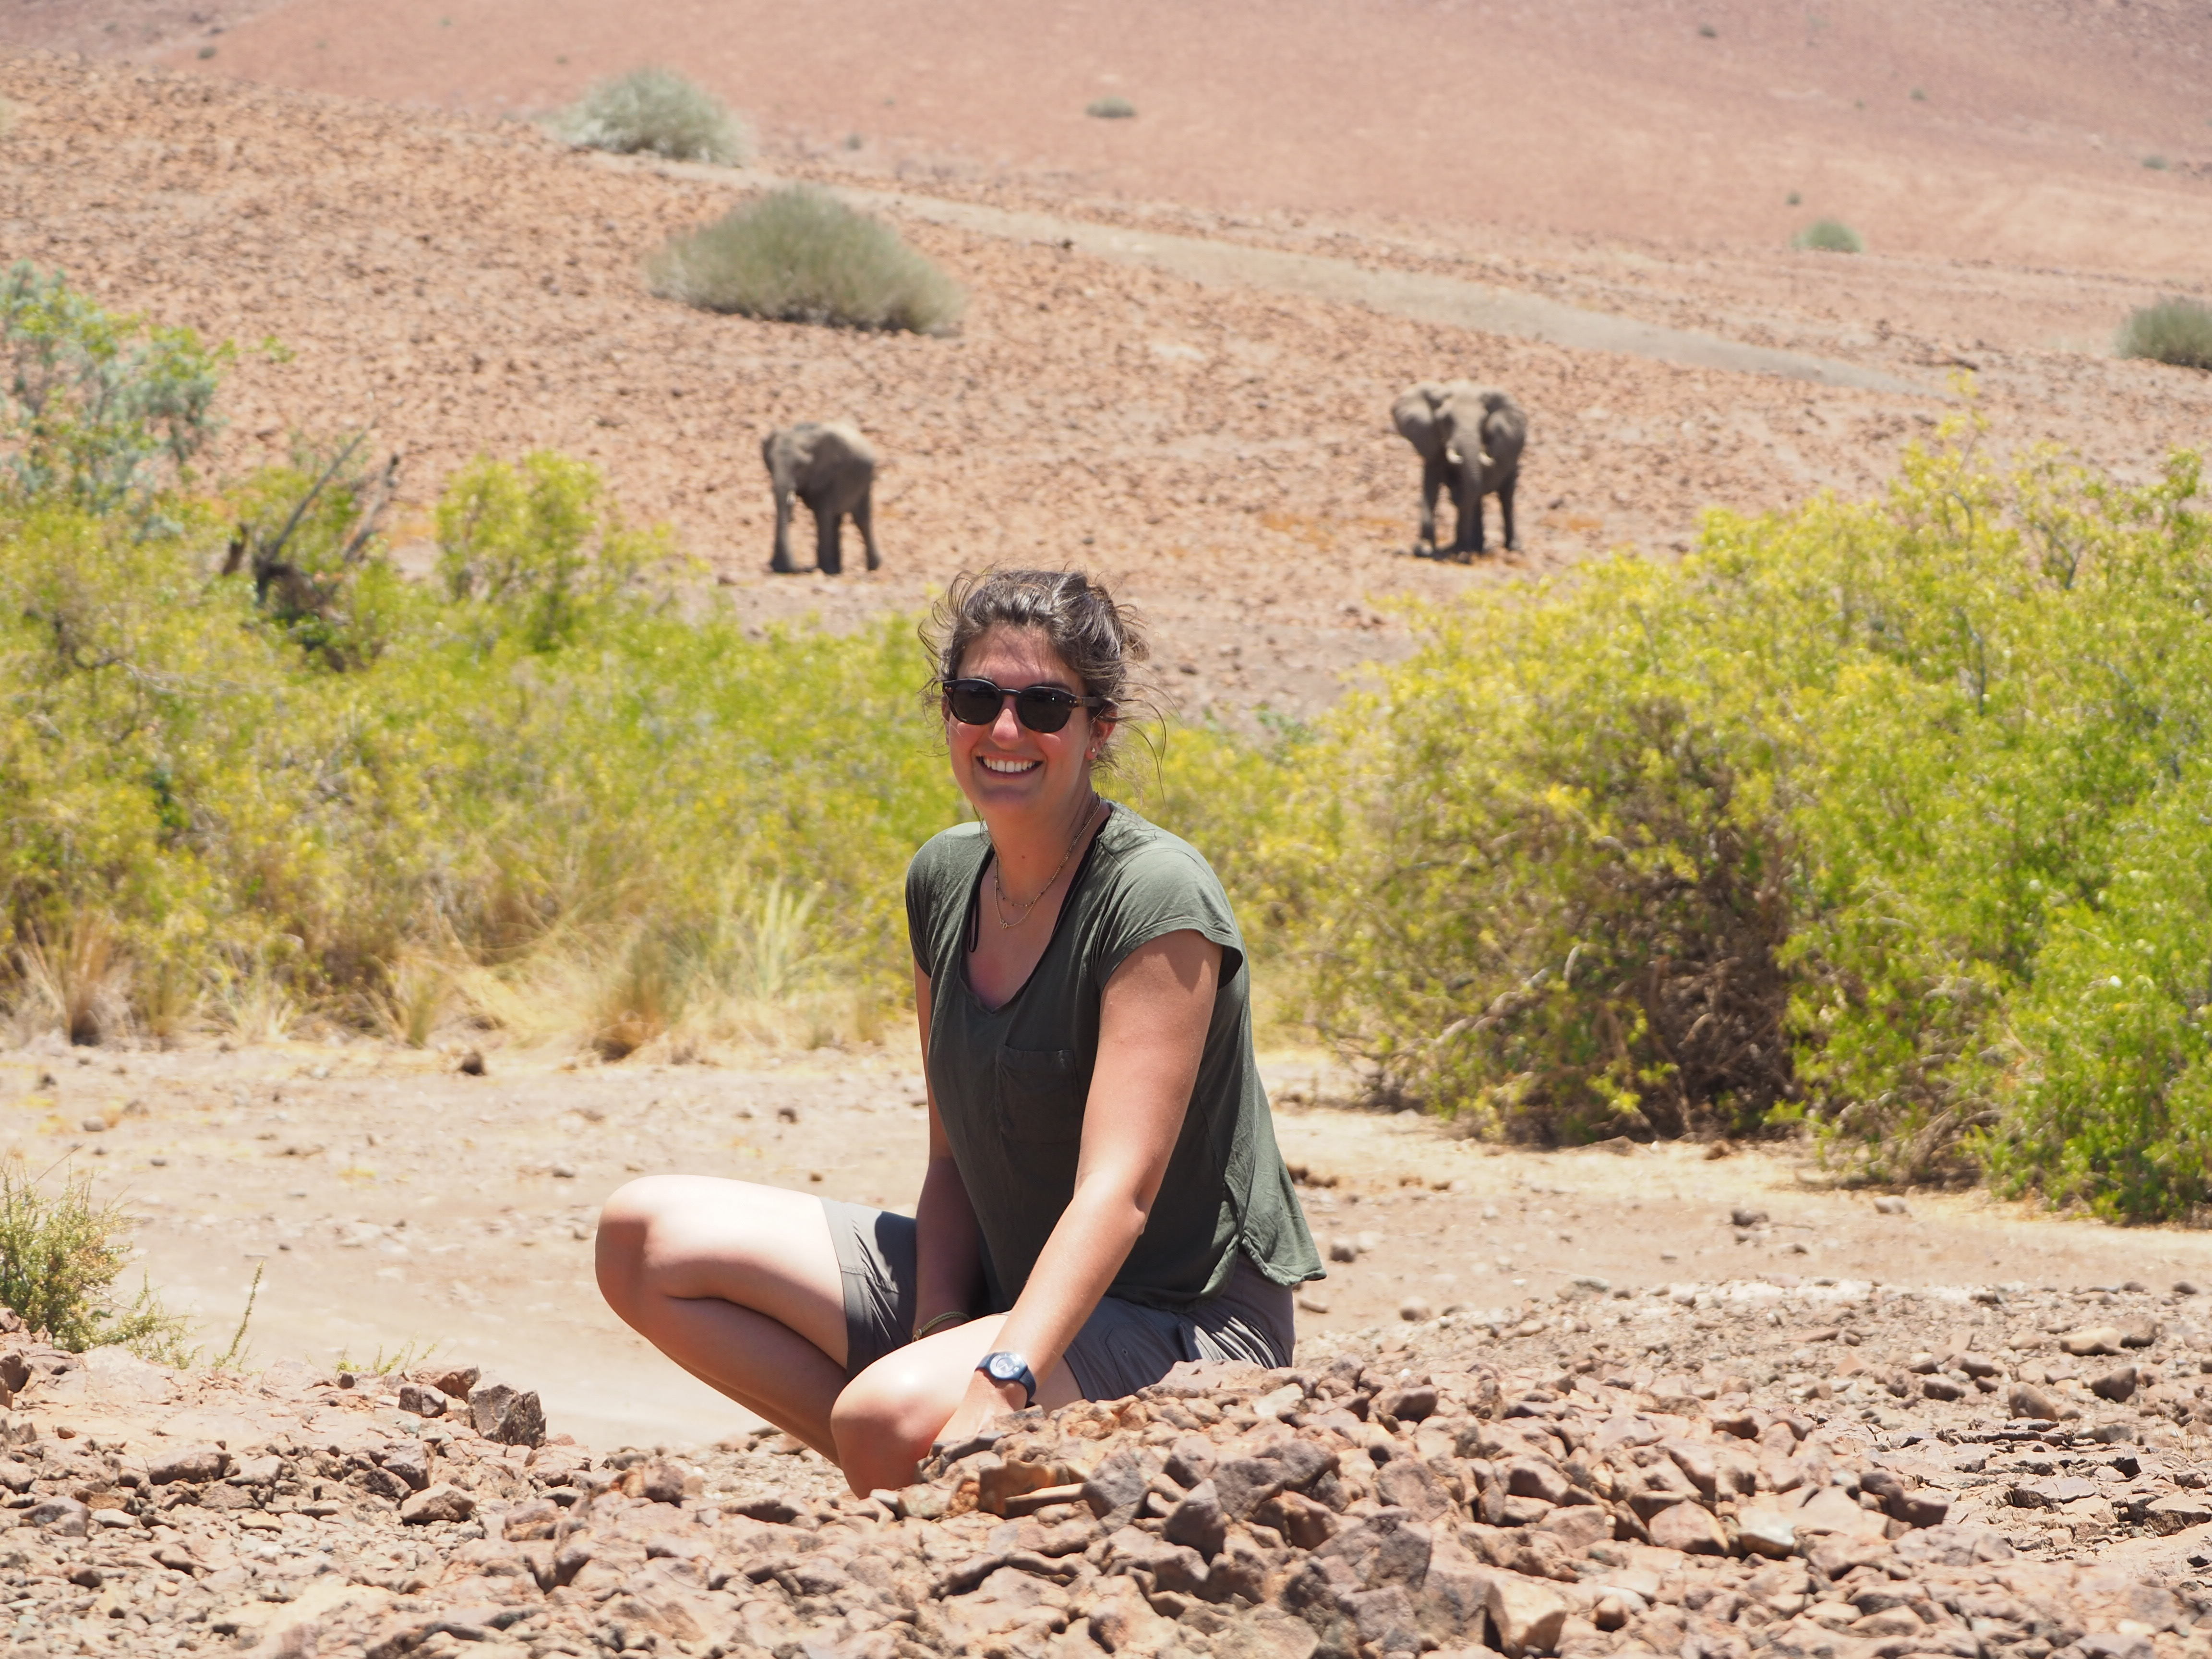 Nico on safari, elephants on the African plains